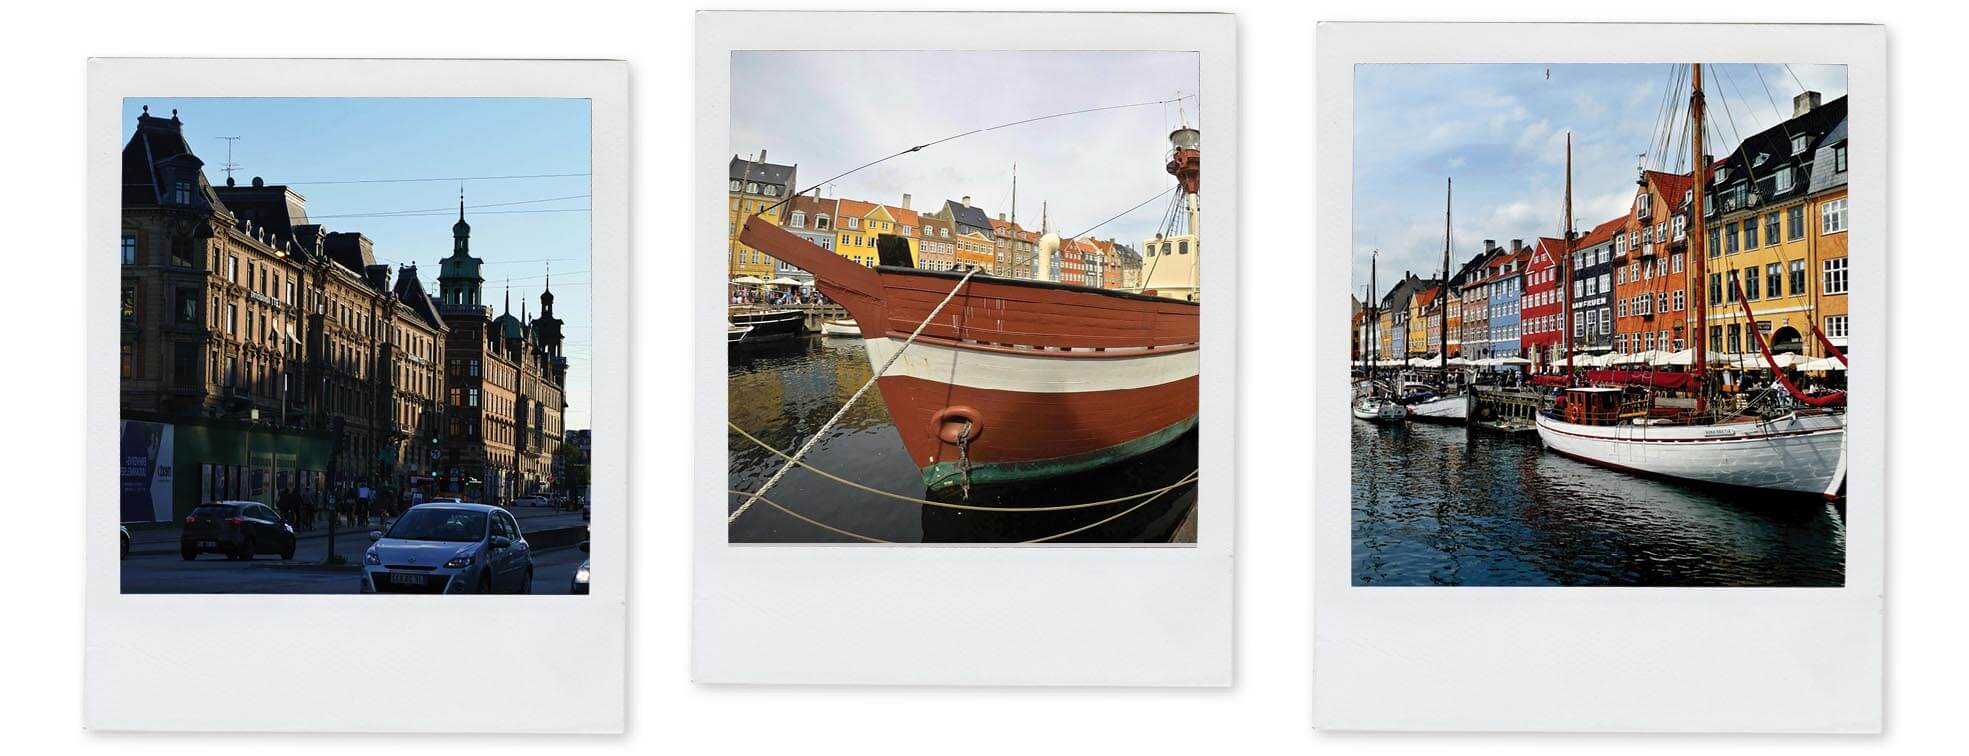 copenhague, danemark, Denmark, nyhavn, bateaux, canal, voyage, europe